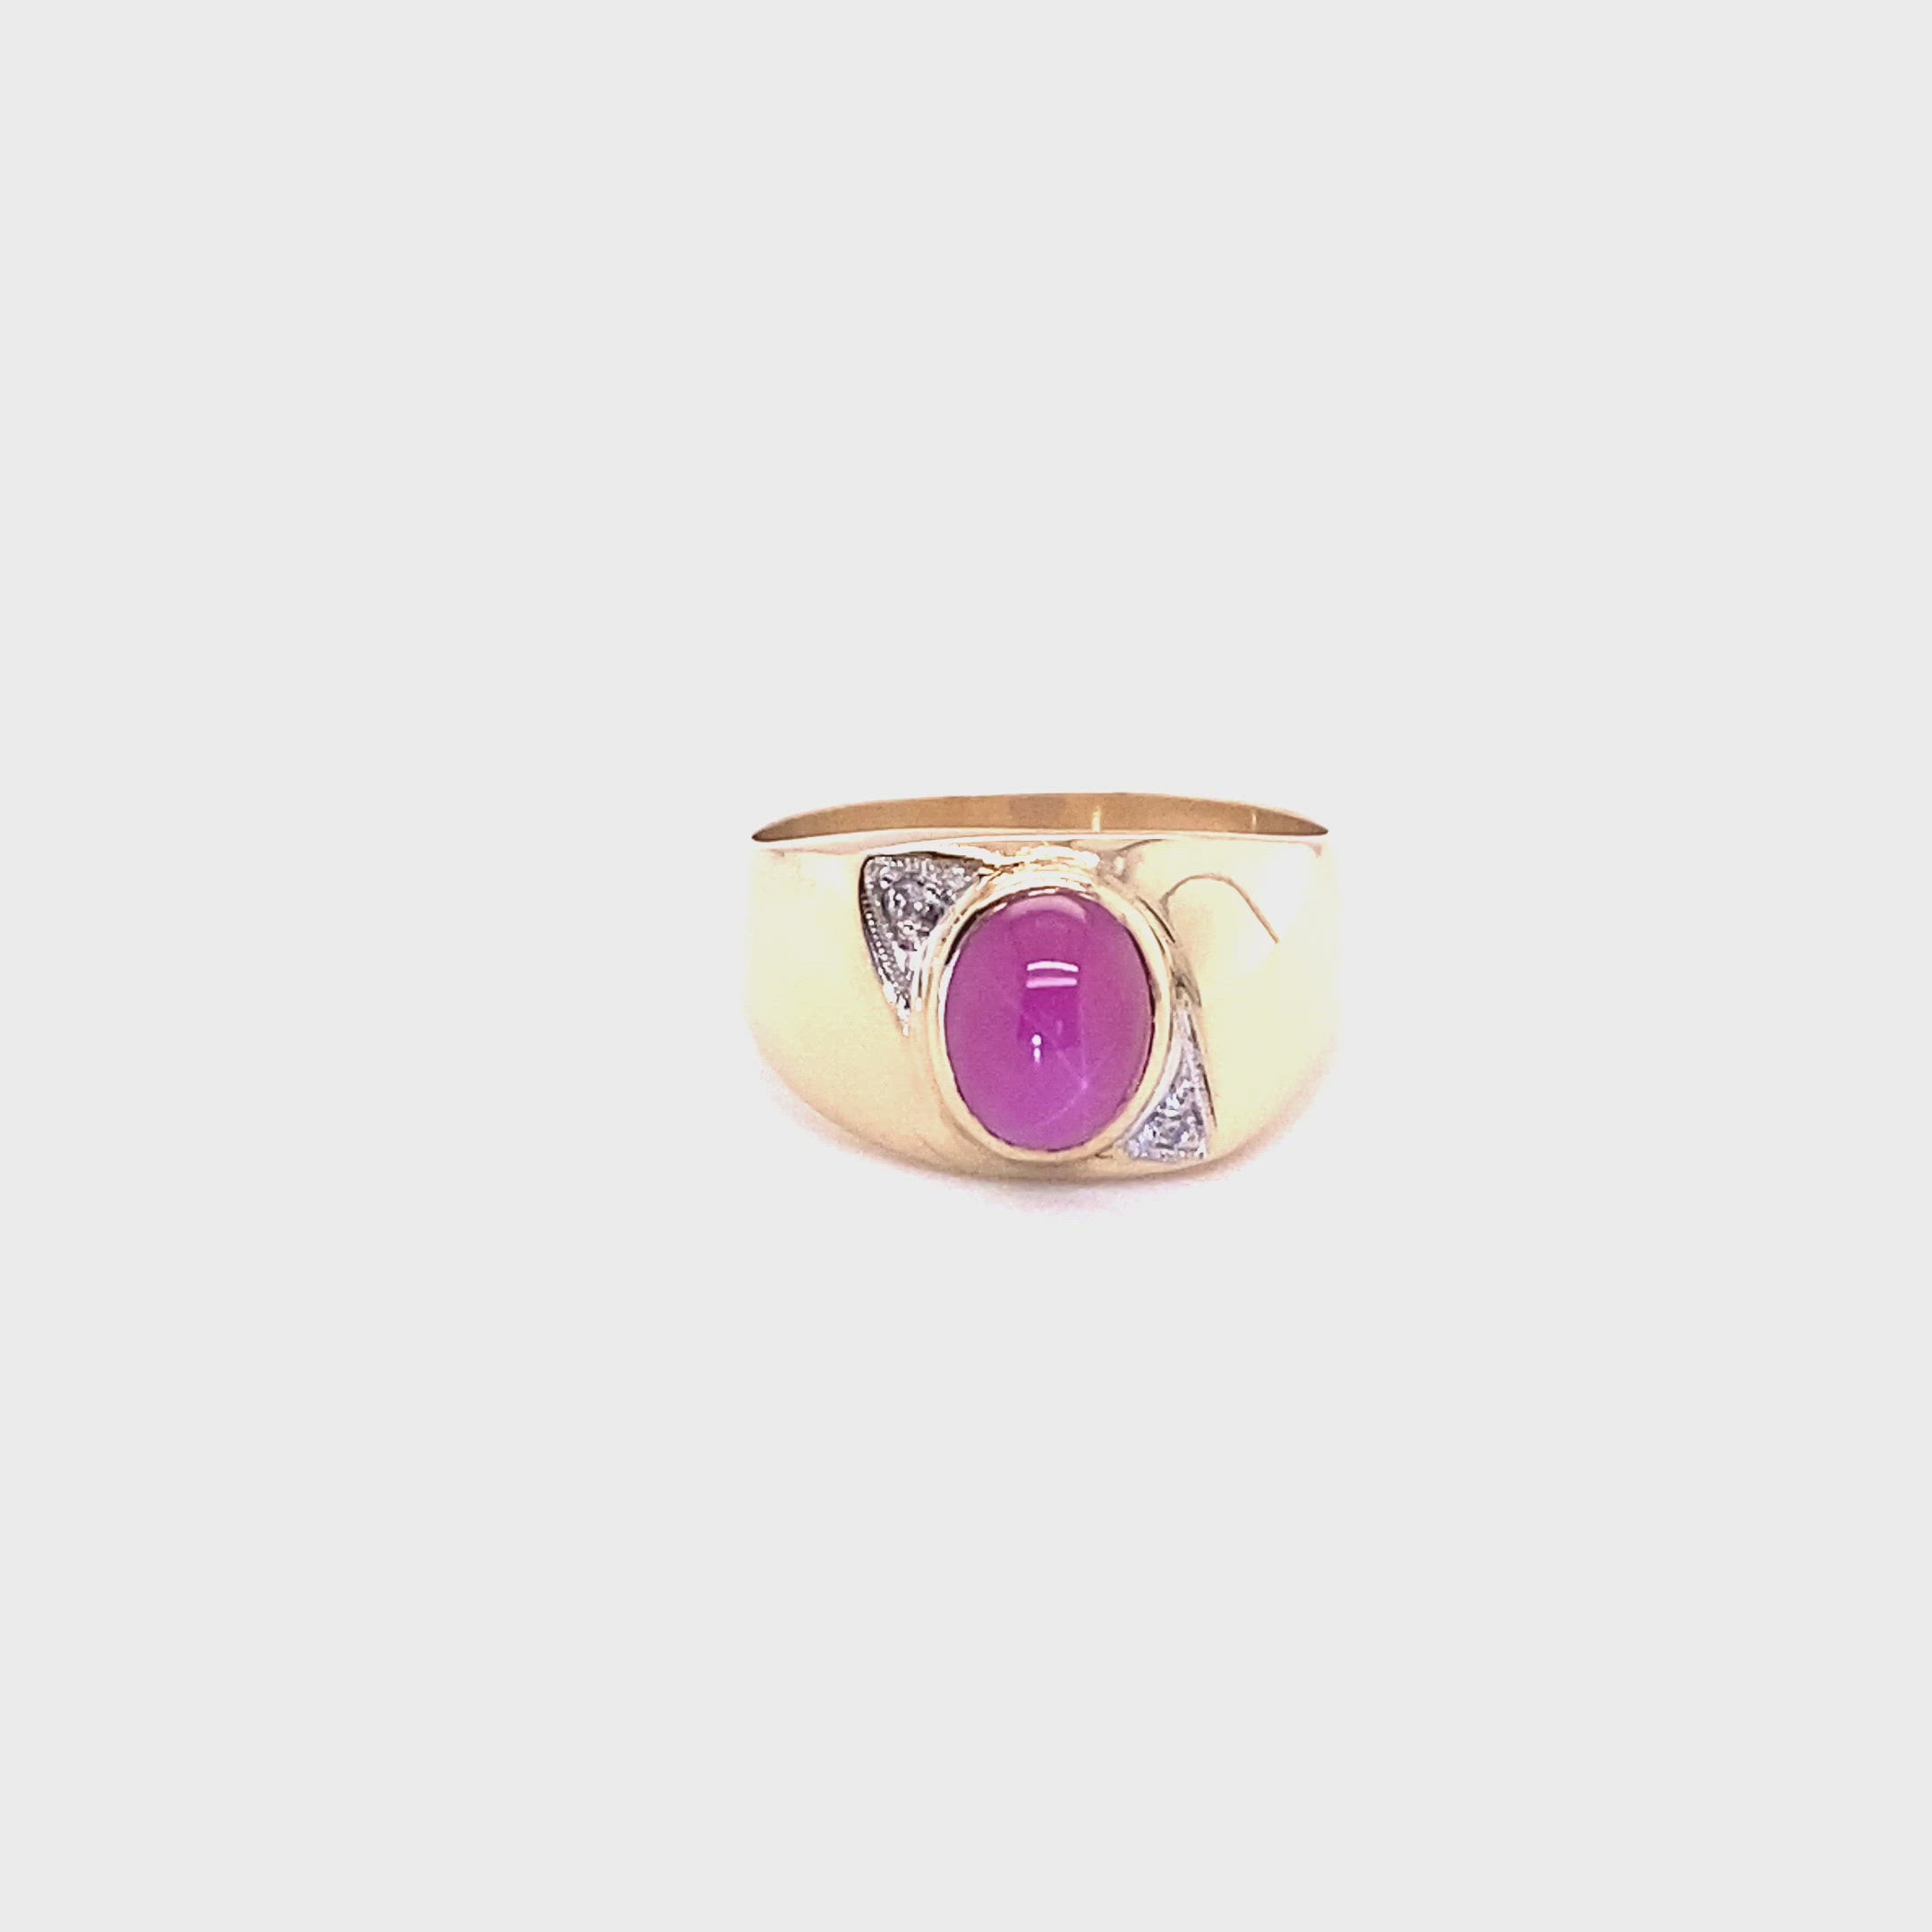 Linde Star Sapphire & Diamond Ring 14K Solid Gold 2.53tcw Gemstone Ring Statement Ring Cocktail Ring Birthstone Ring Vintage Ring Estate